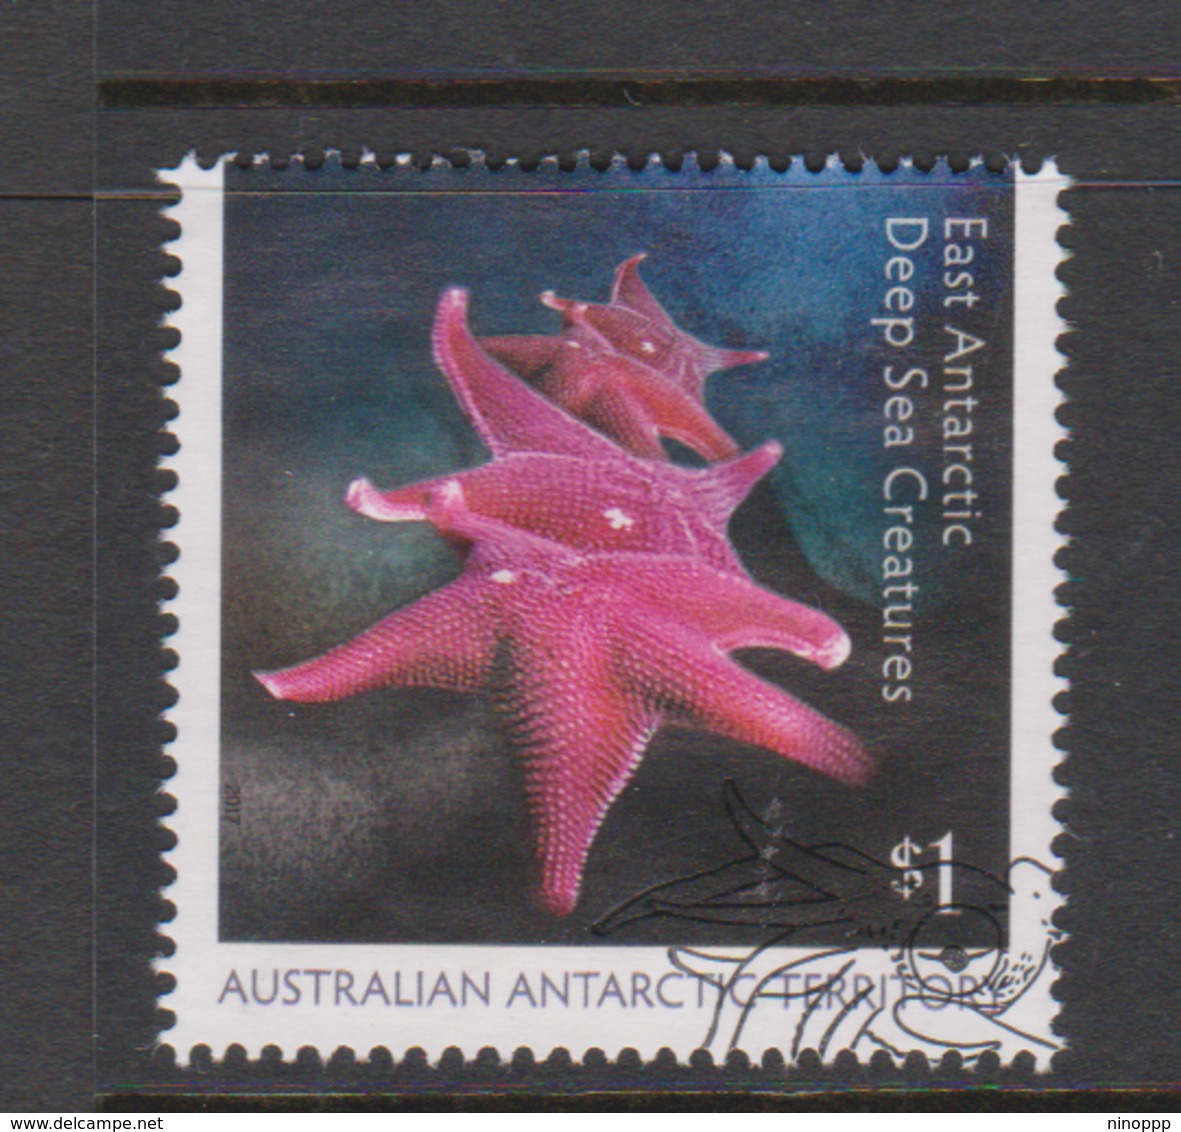 Australian Antarctic Territory ASC 239 2017 East Antarctic Deep Sea Creatures,$ 1.00 Star,used, - Used Stamps